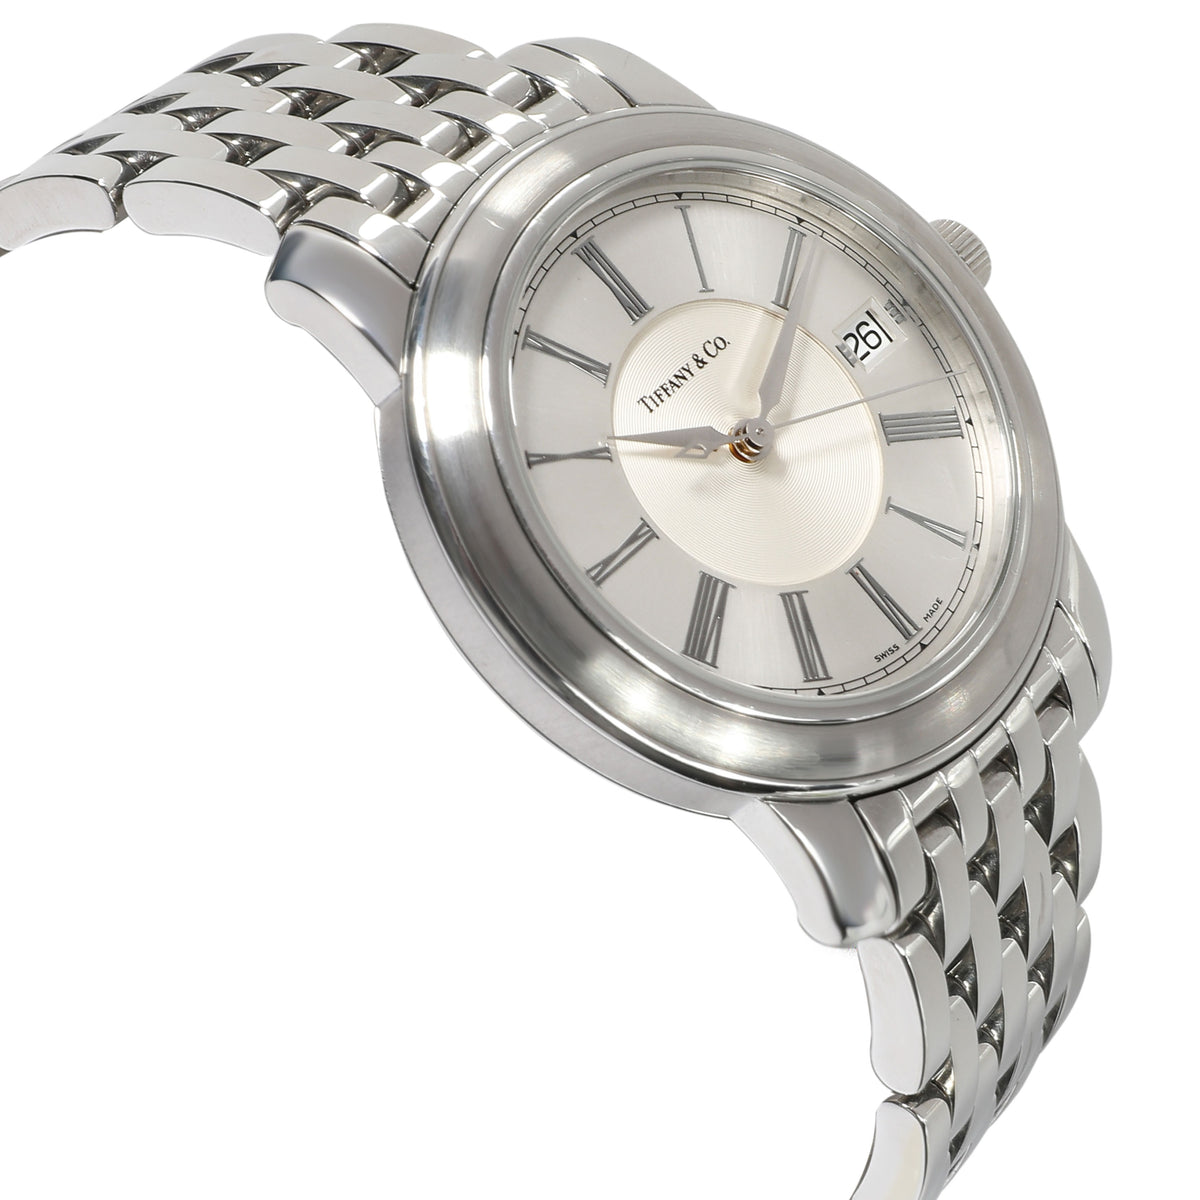 Tiffany & Co. Mark Resonator Mark Resonator Men's Watch in  Stainless Steel